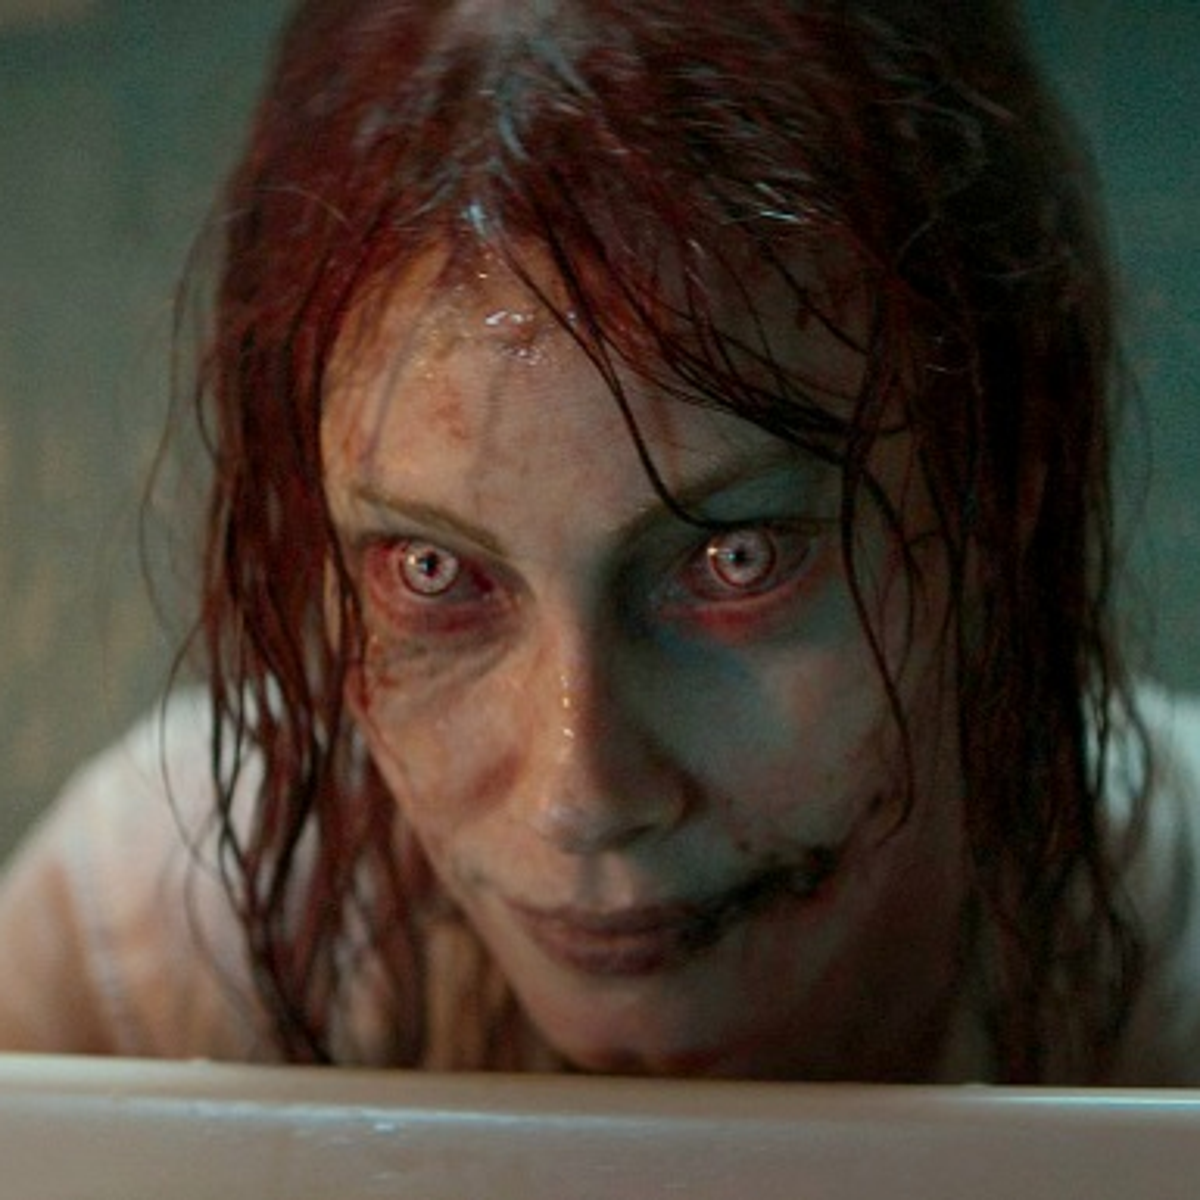 Evil Dead Rise regista 96% no Rotten Tomatoes